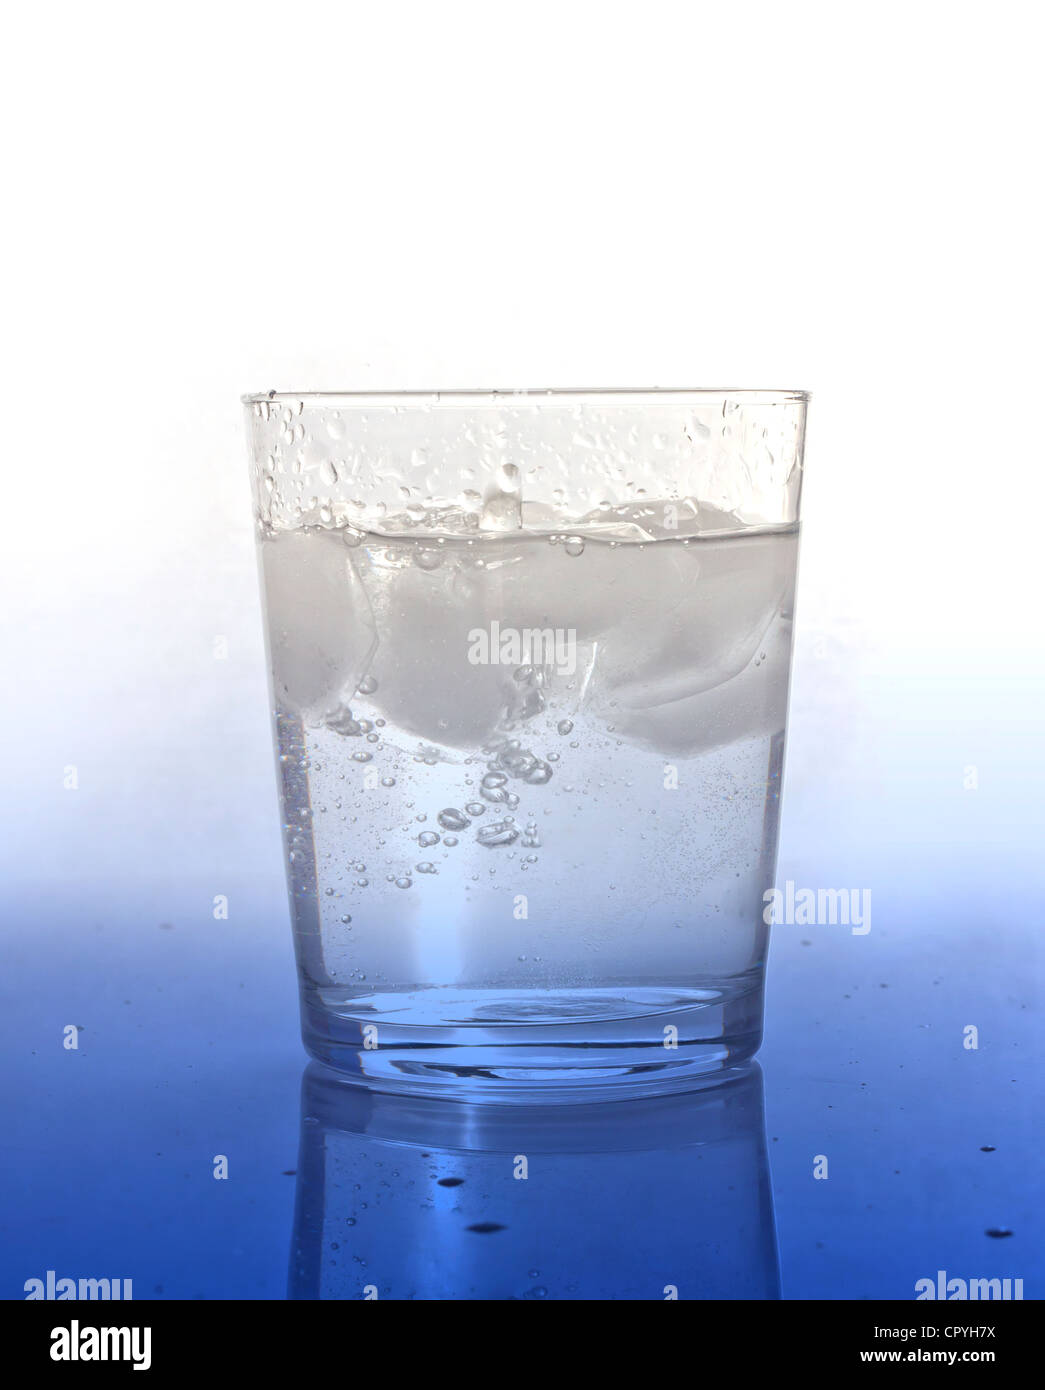 Почему лед плавает. Лед в стакане. Стакан воды со льдом. Лед плавает в стакане. Вода лед в стакане плавает.